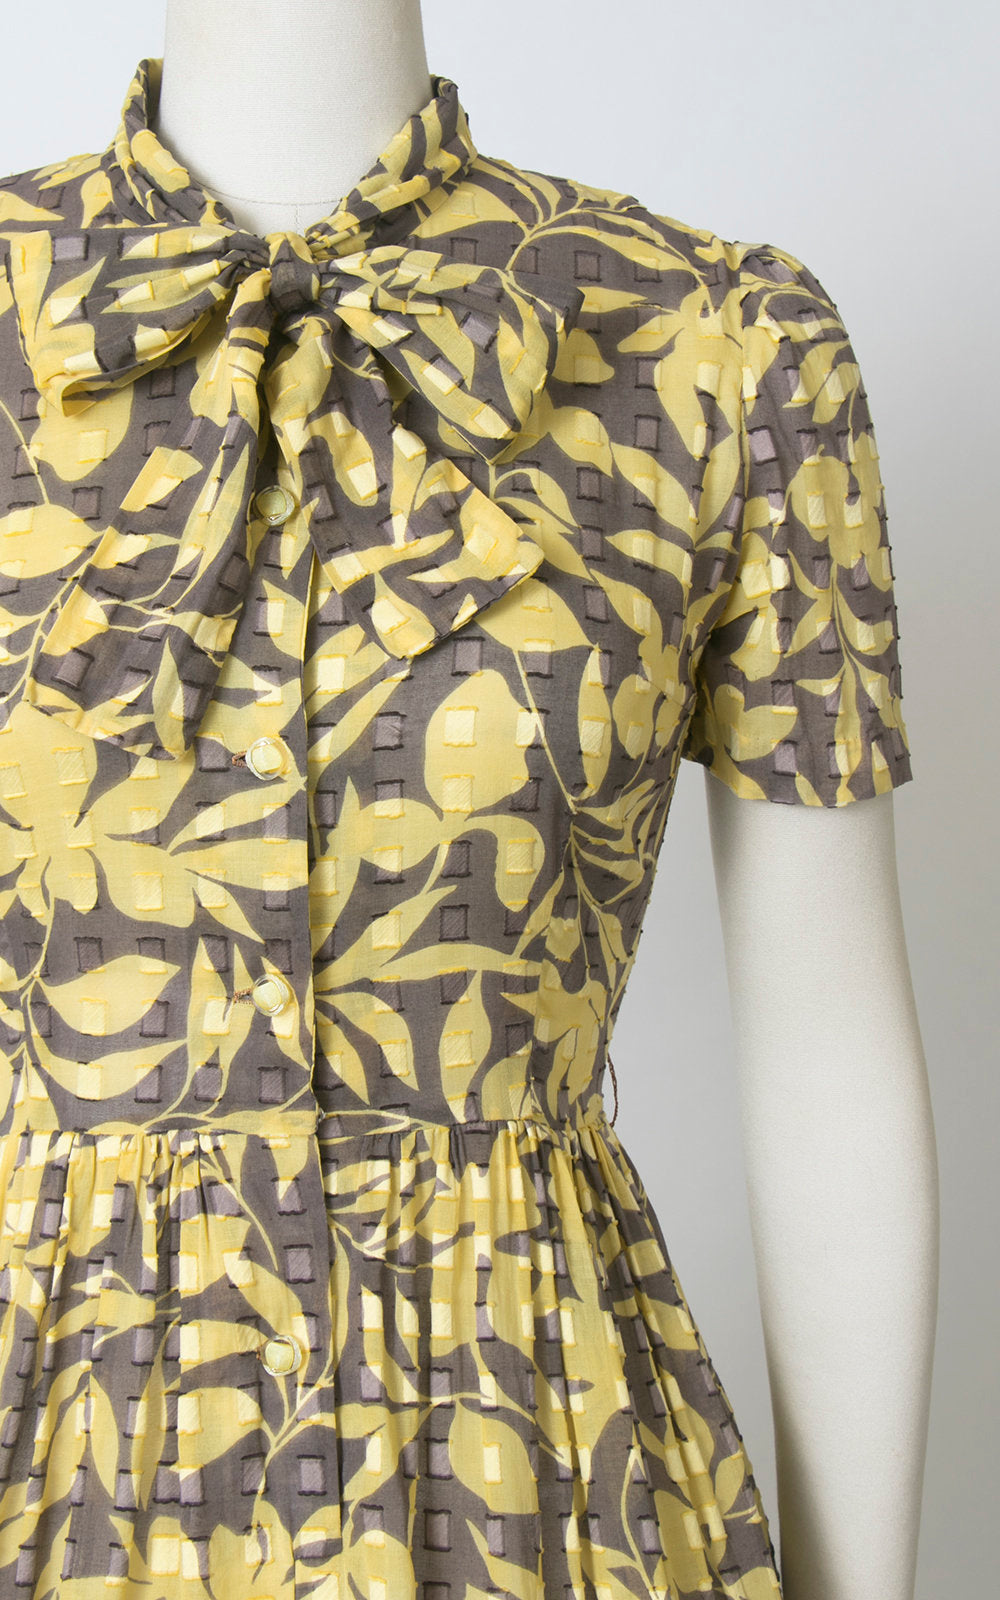 Vintage 1960s Dress | 60s Floral Cotton Secretary Shirt Dress Chartreuse Pussy Bow Shirtwaist Day Dress (medium)